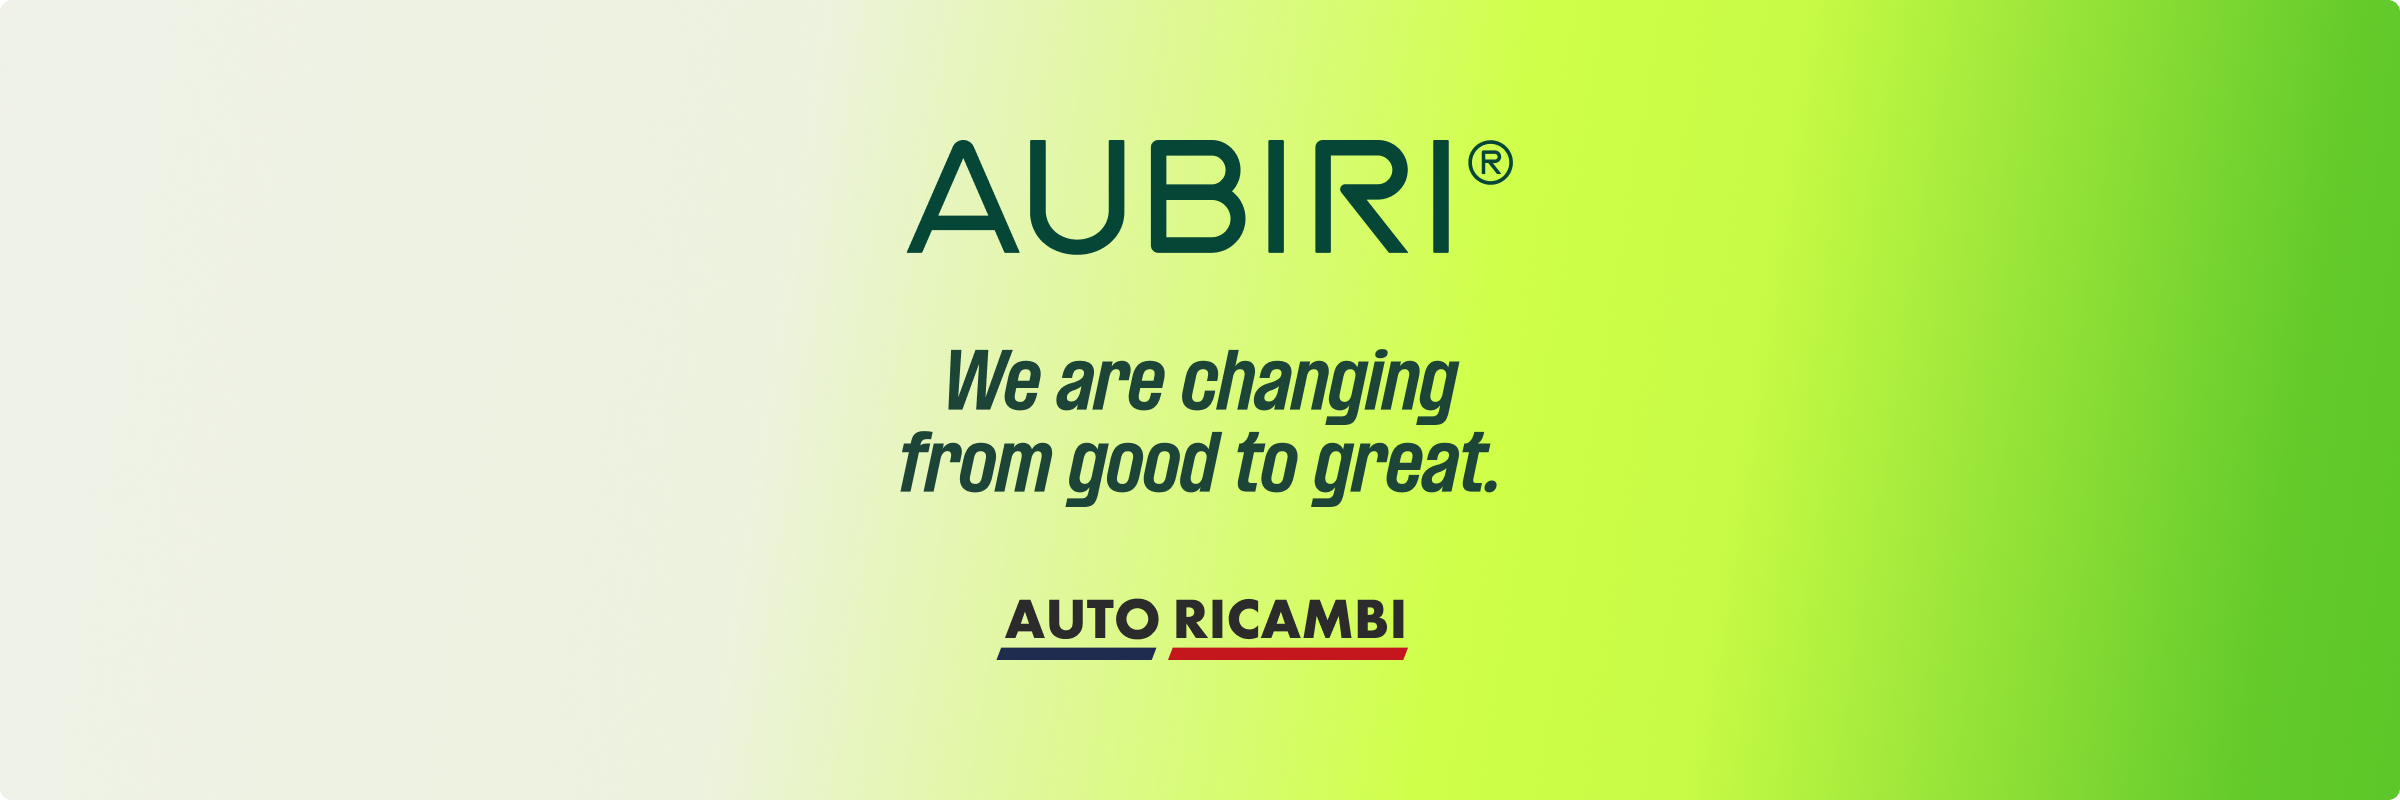 AutoRicambi is changing to AUBIRI